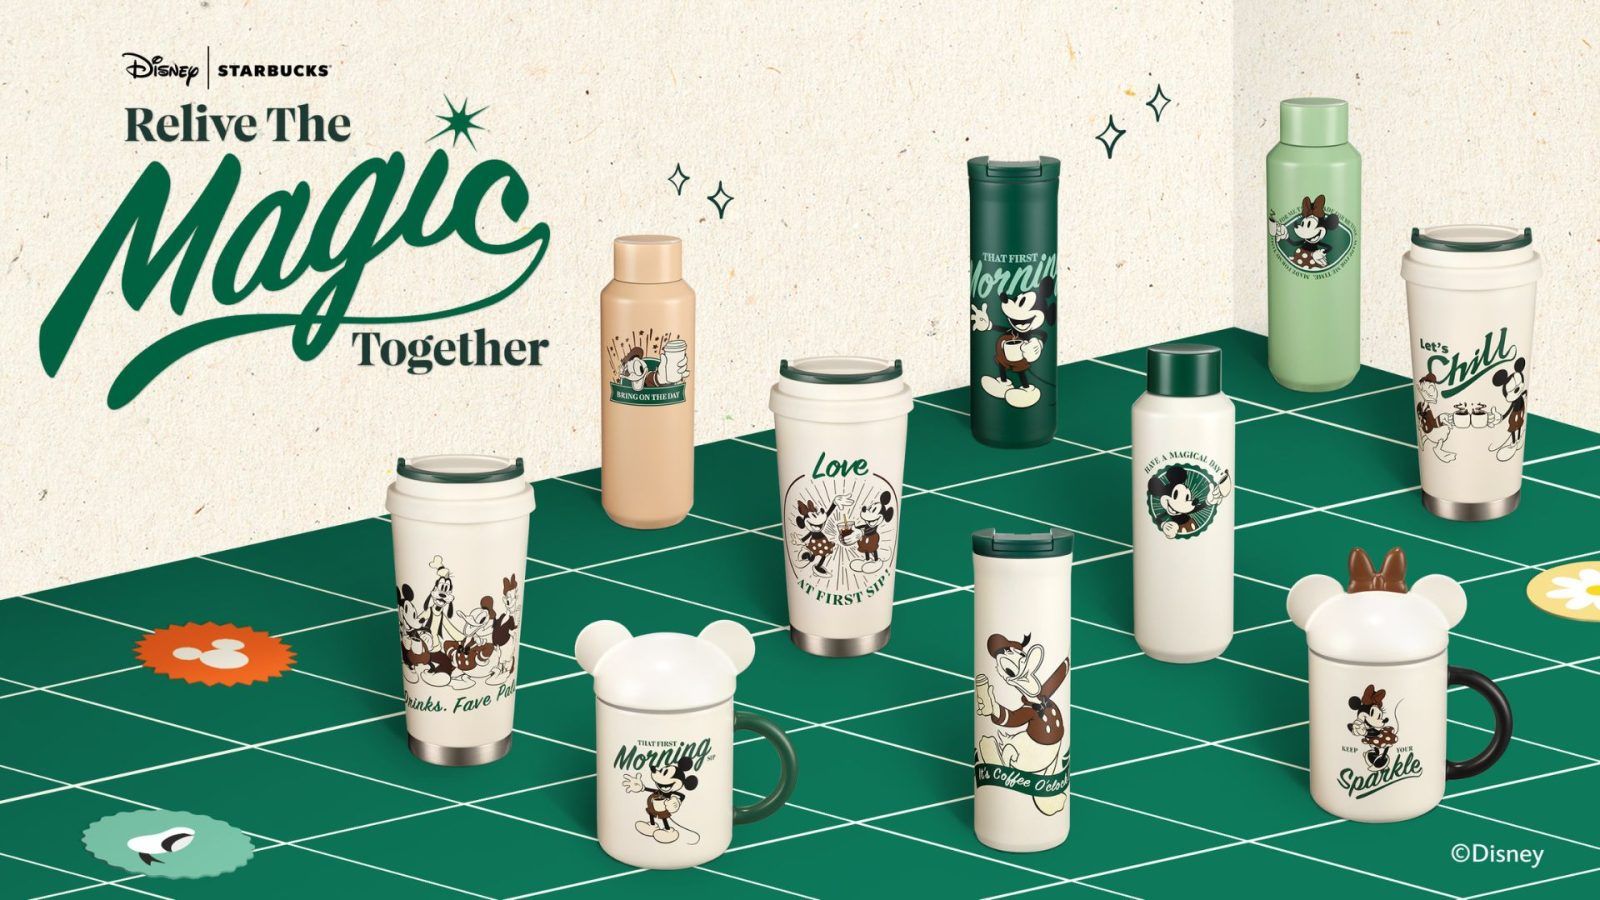 Starbucks Tumblers Hong Kong 2023 Disney cup